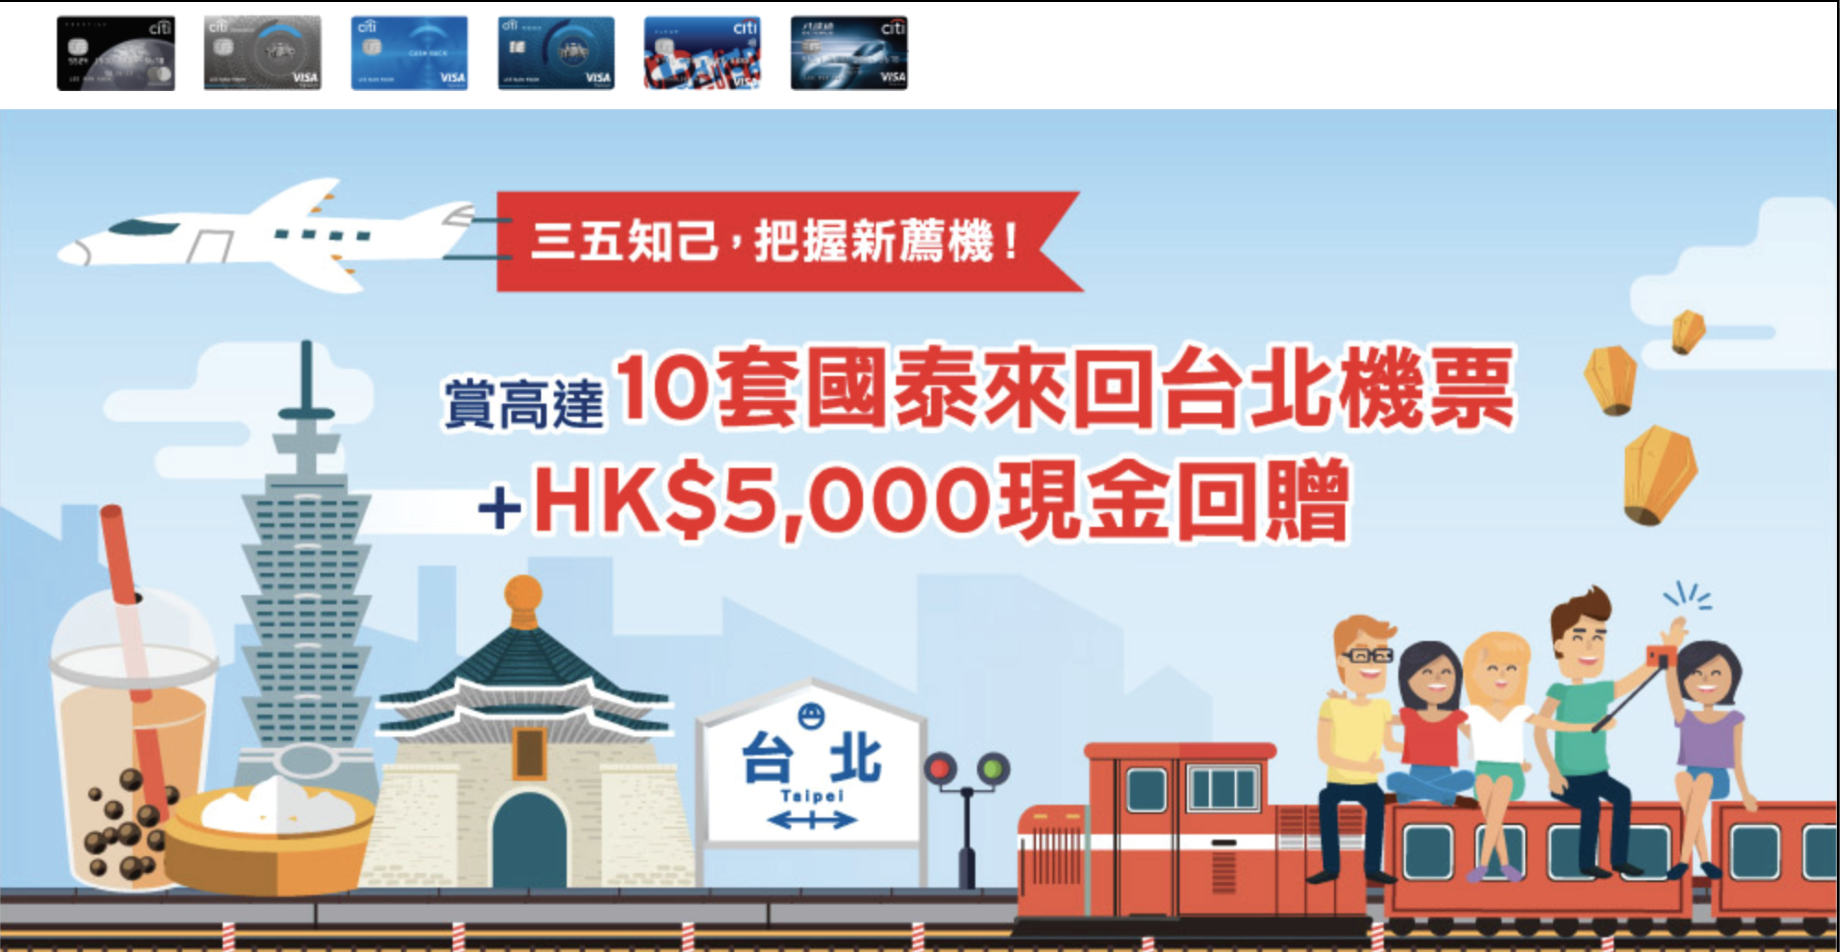 Citi 2019夏季 Member-Get-Member推薦計劃！推薦9個人即有10套國泰來回台北機票 + HK$5,000現金回贈！